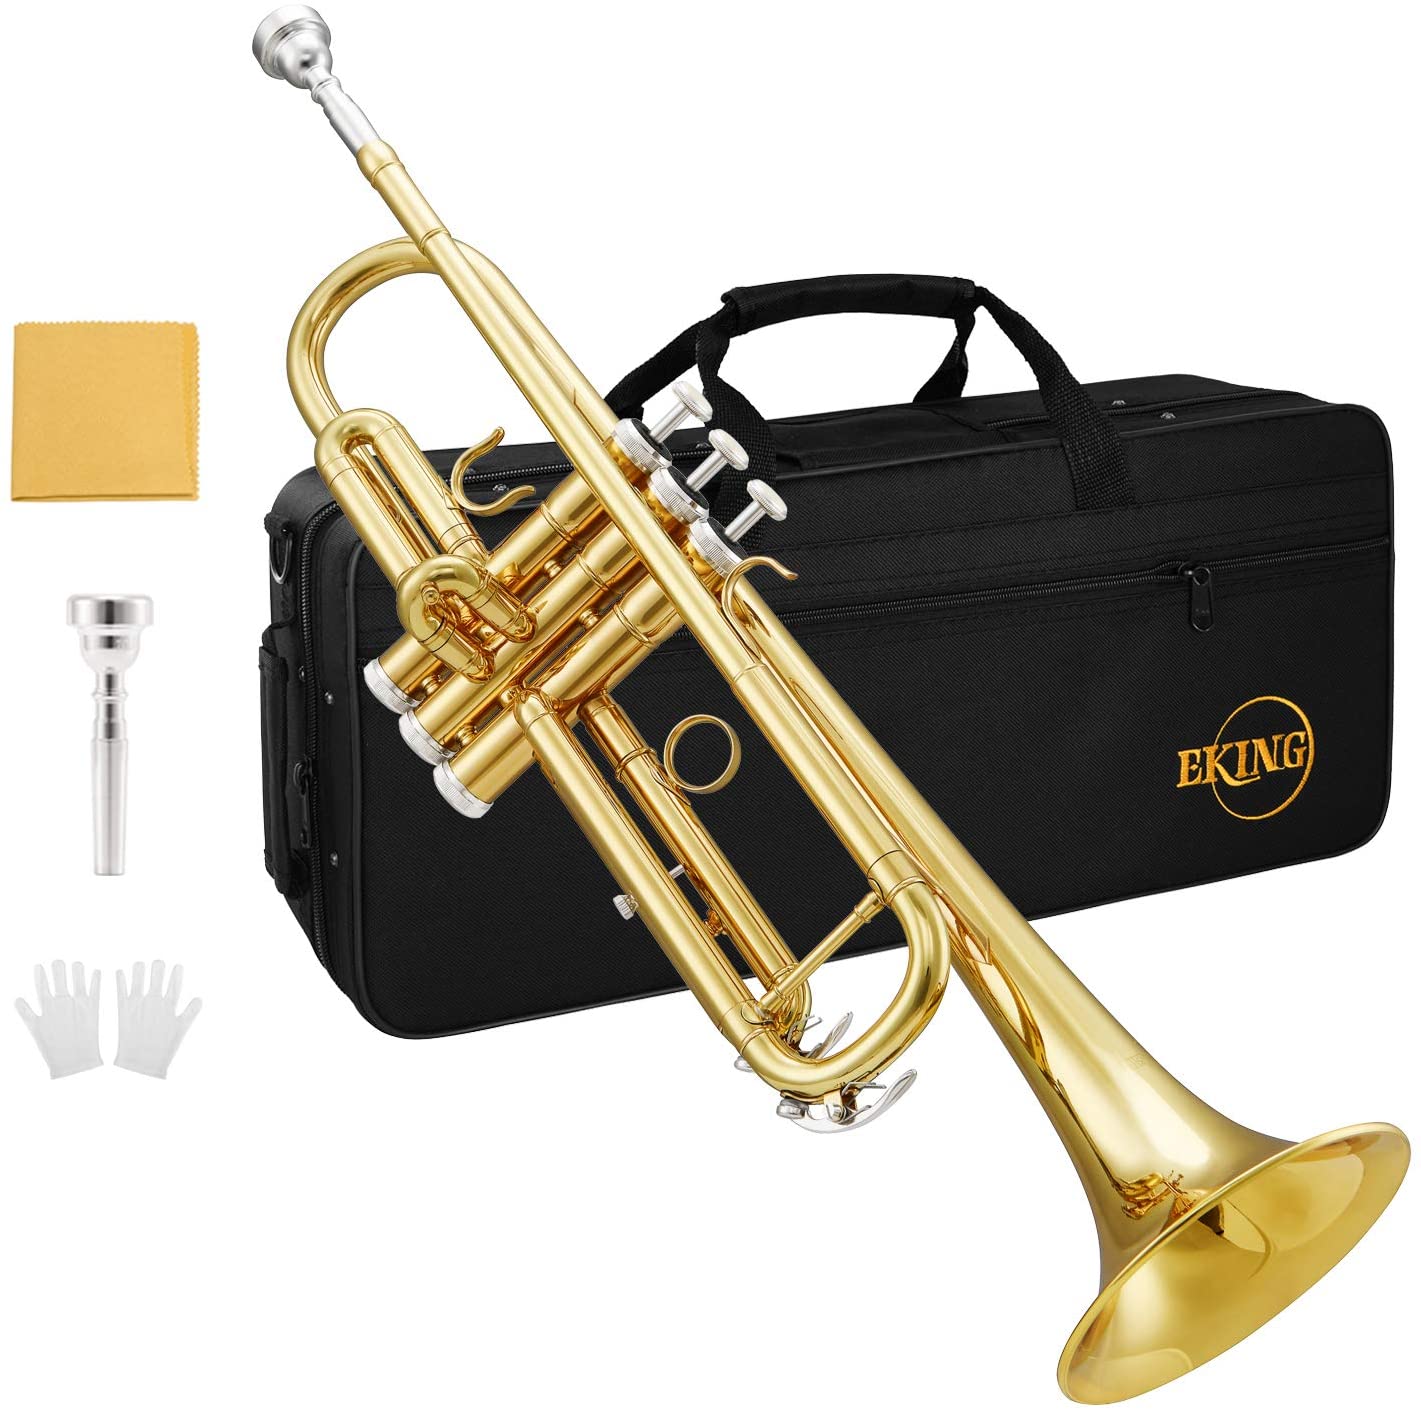 Amazon Prime Members: Eking Bb Standard Brass Trumpet for Beginners $98.57 + Free Shipping